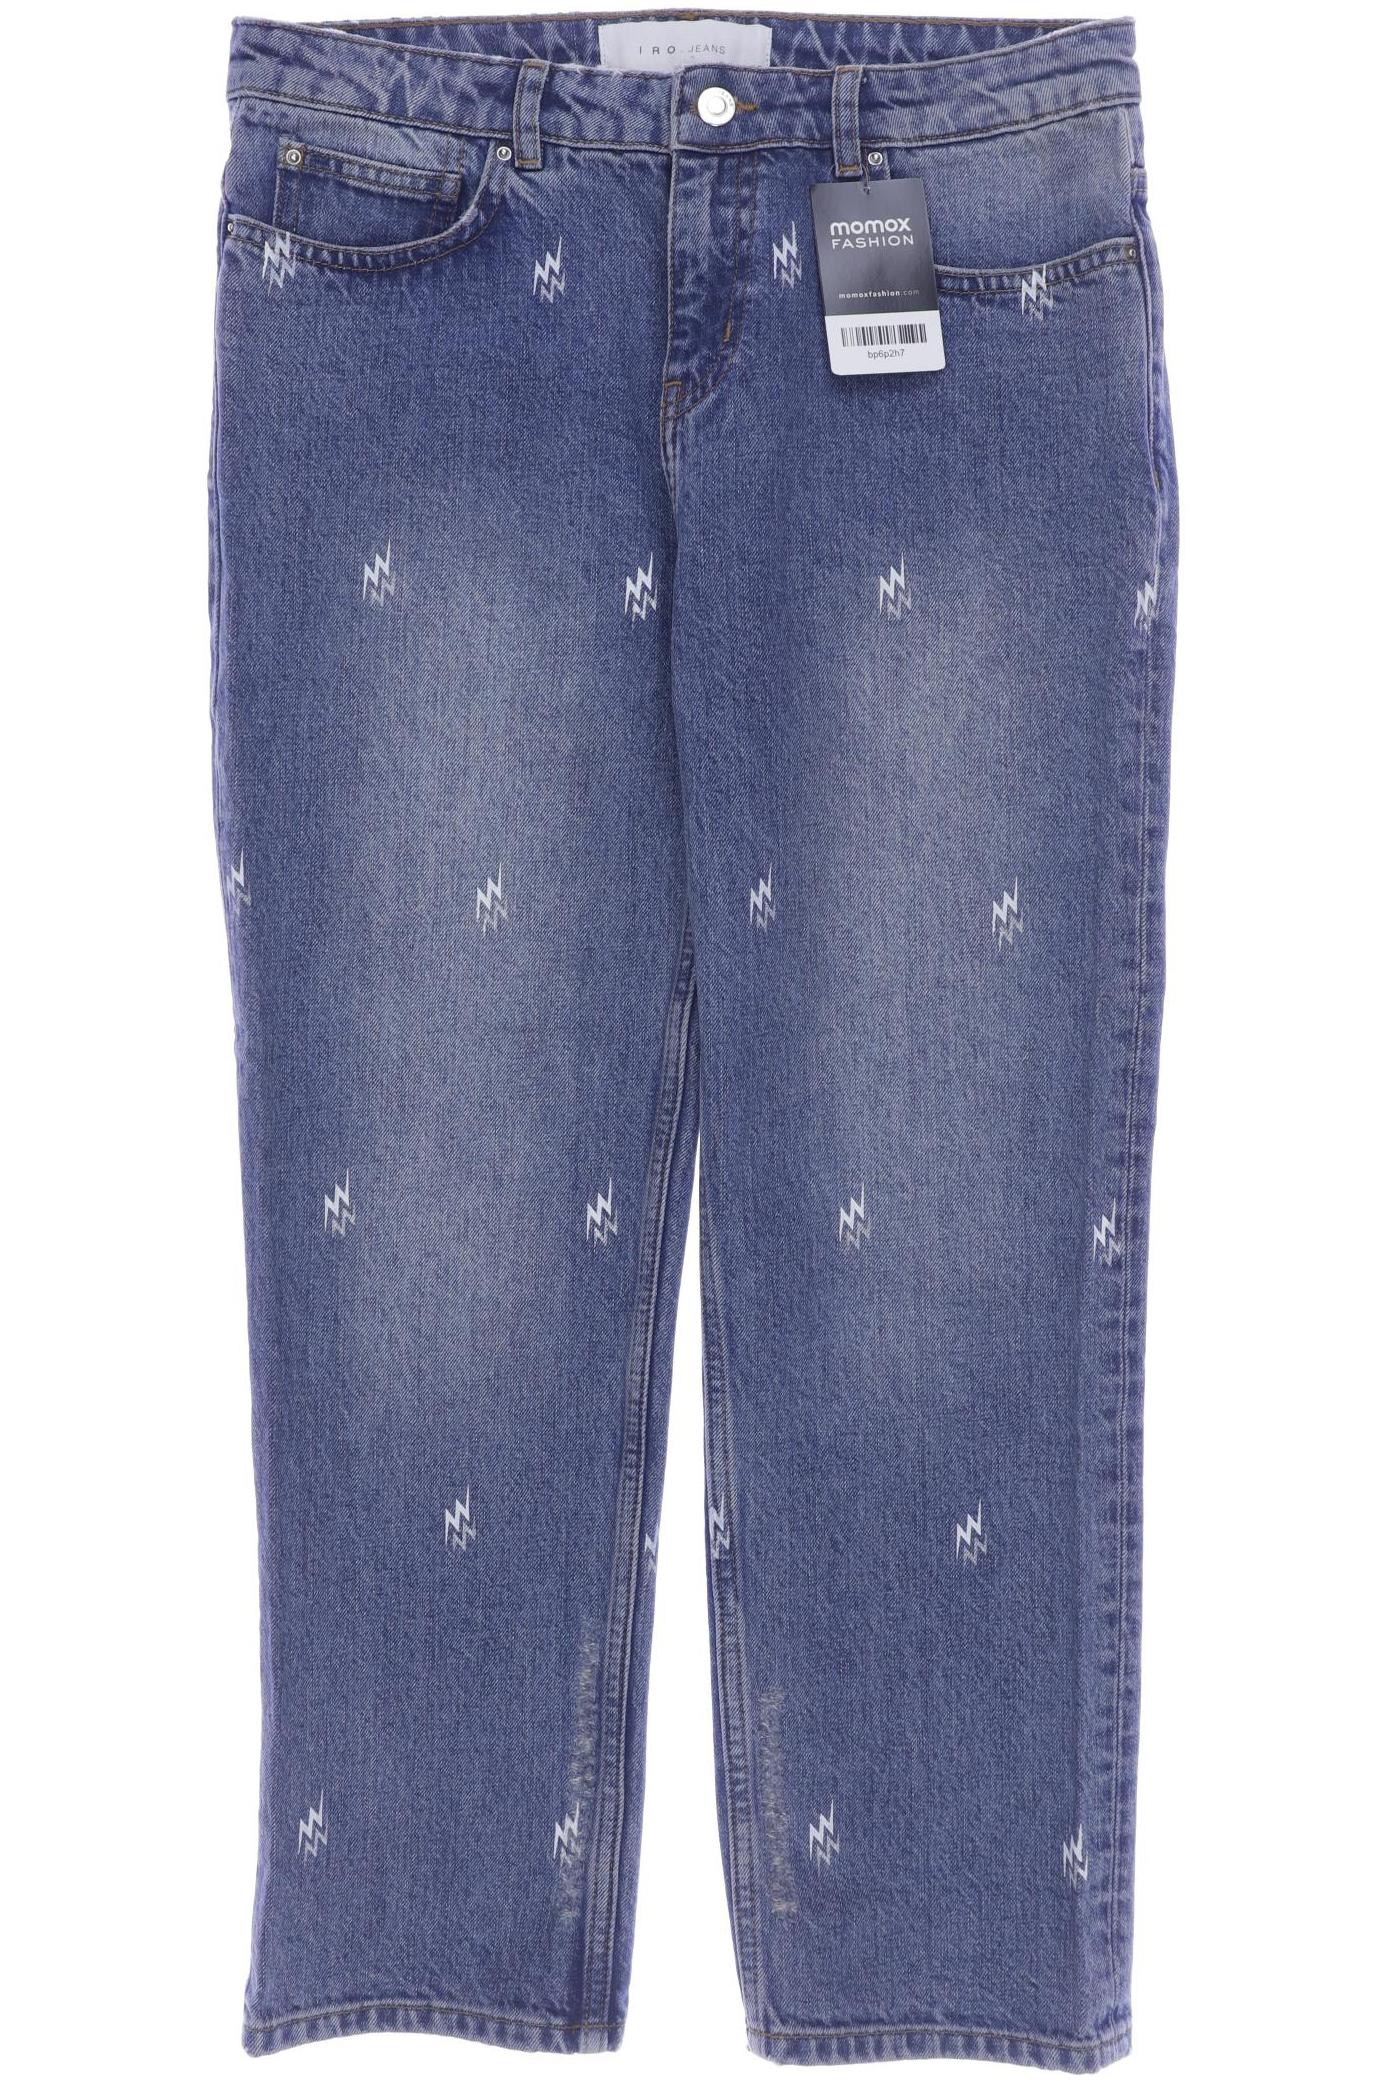 Iro Damen Jeans, blau, Gr. 36 von Iro